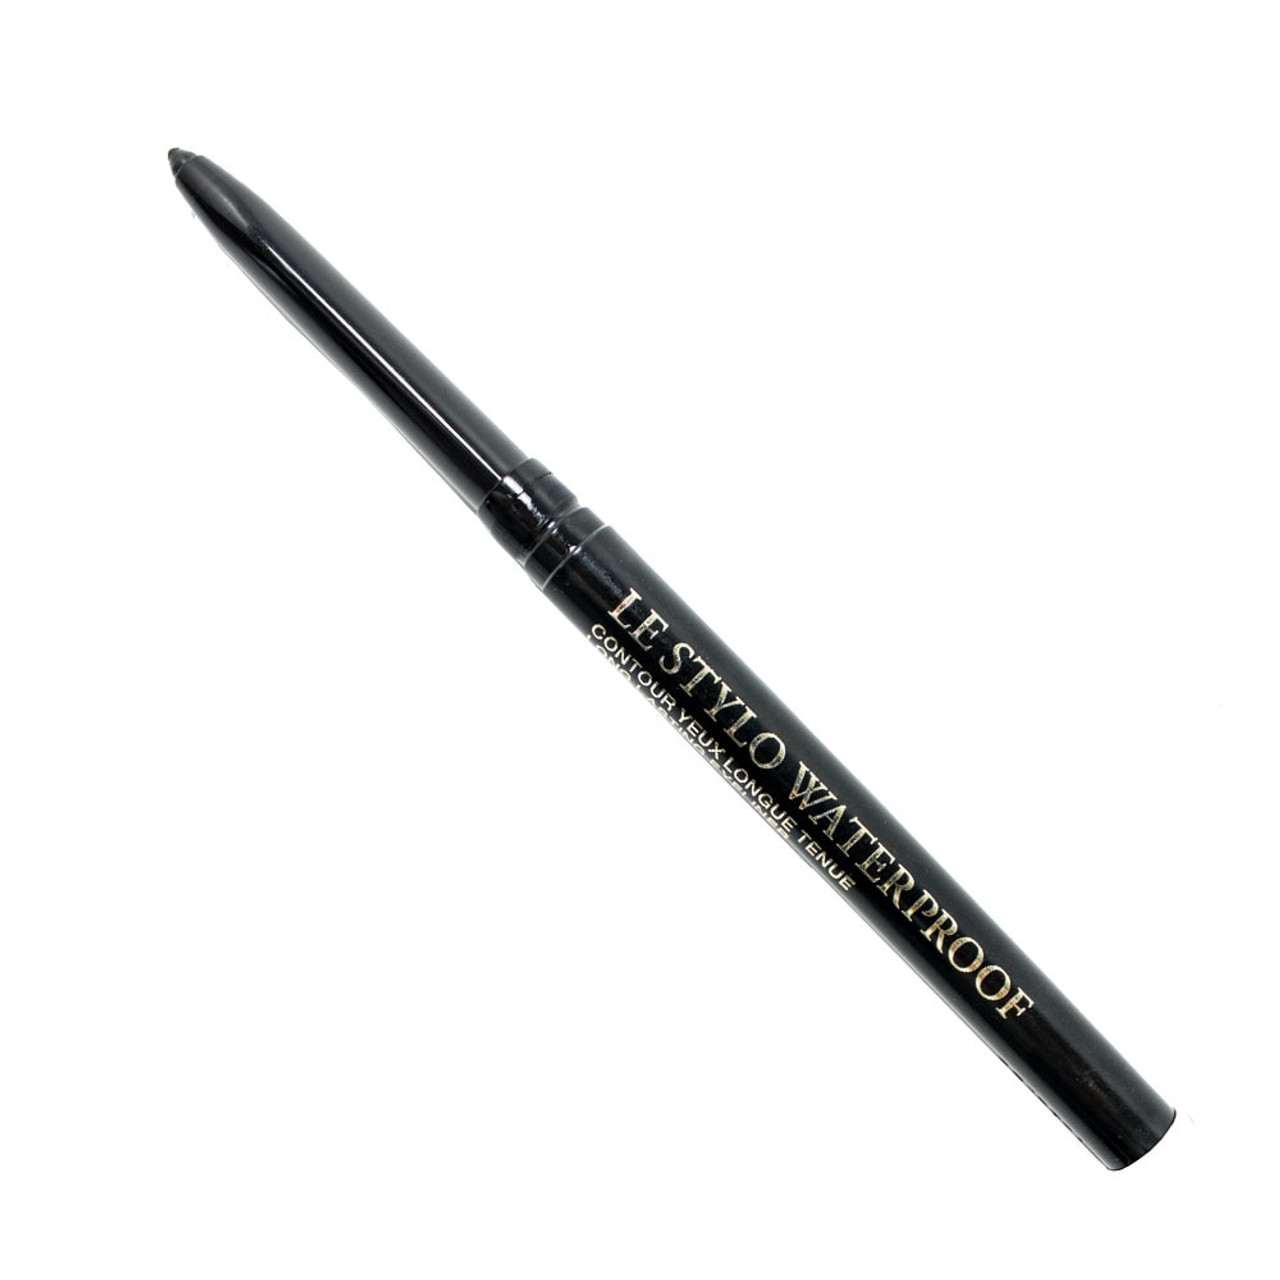 Le Stylo Waterproof Long-Wearing Eyeliner Pencil - Lancôme